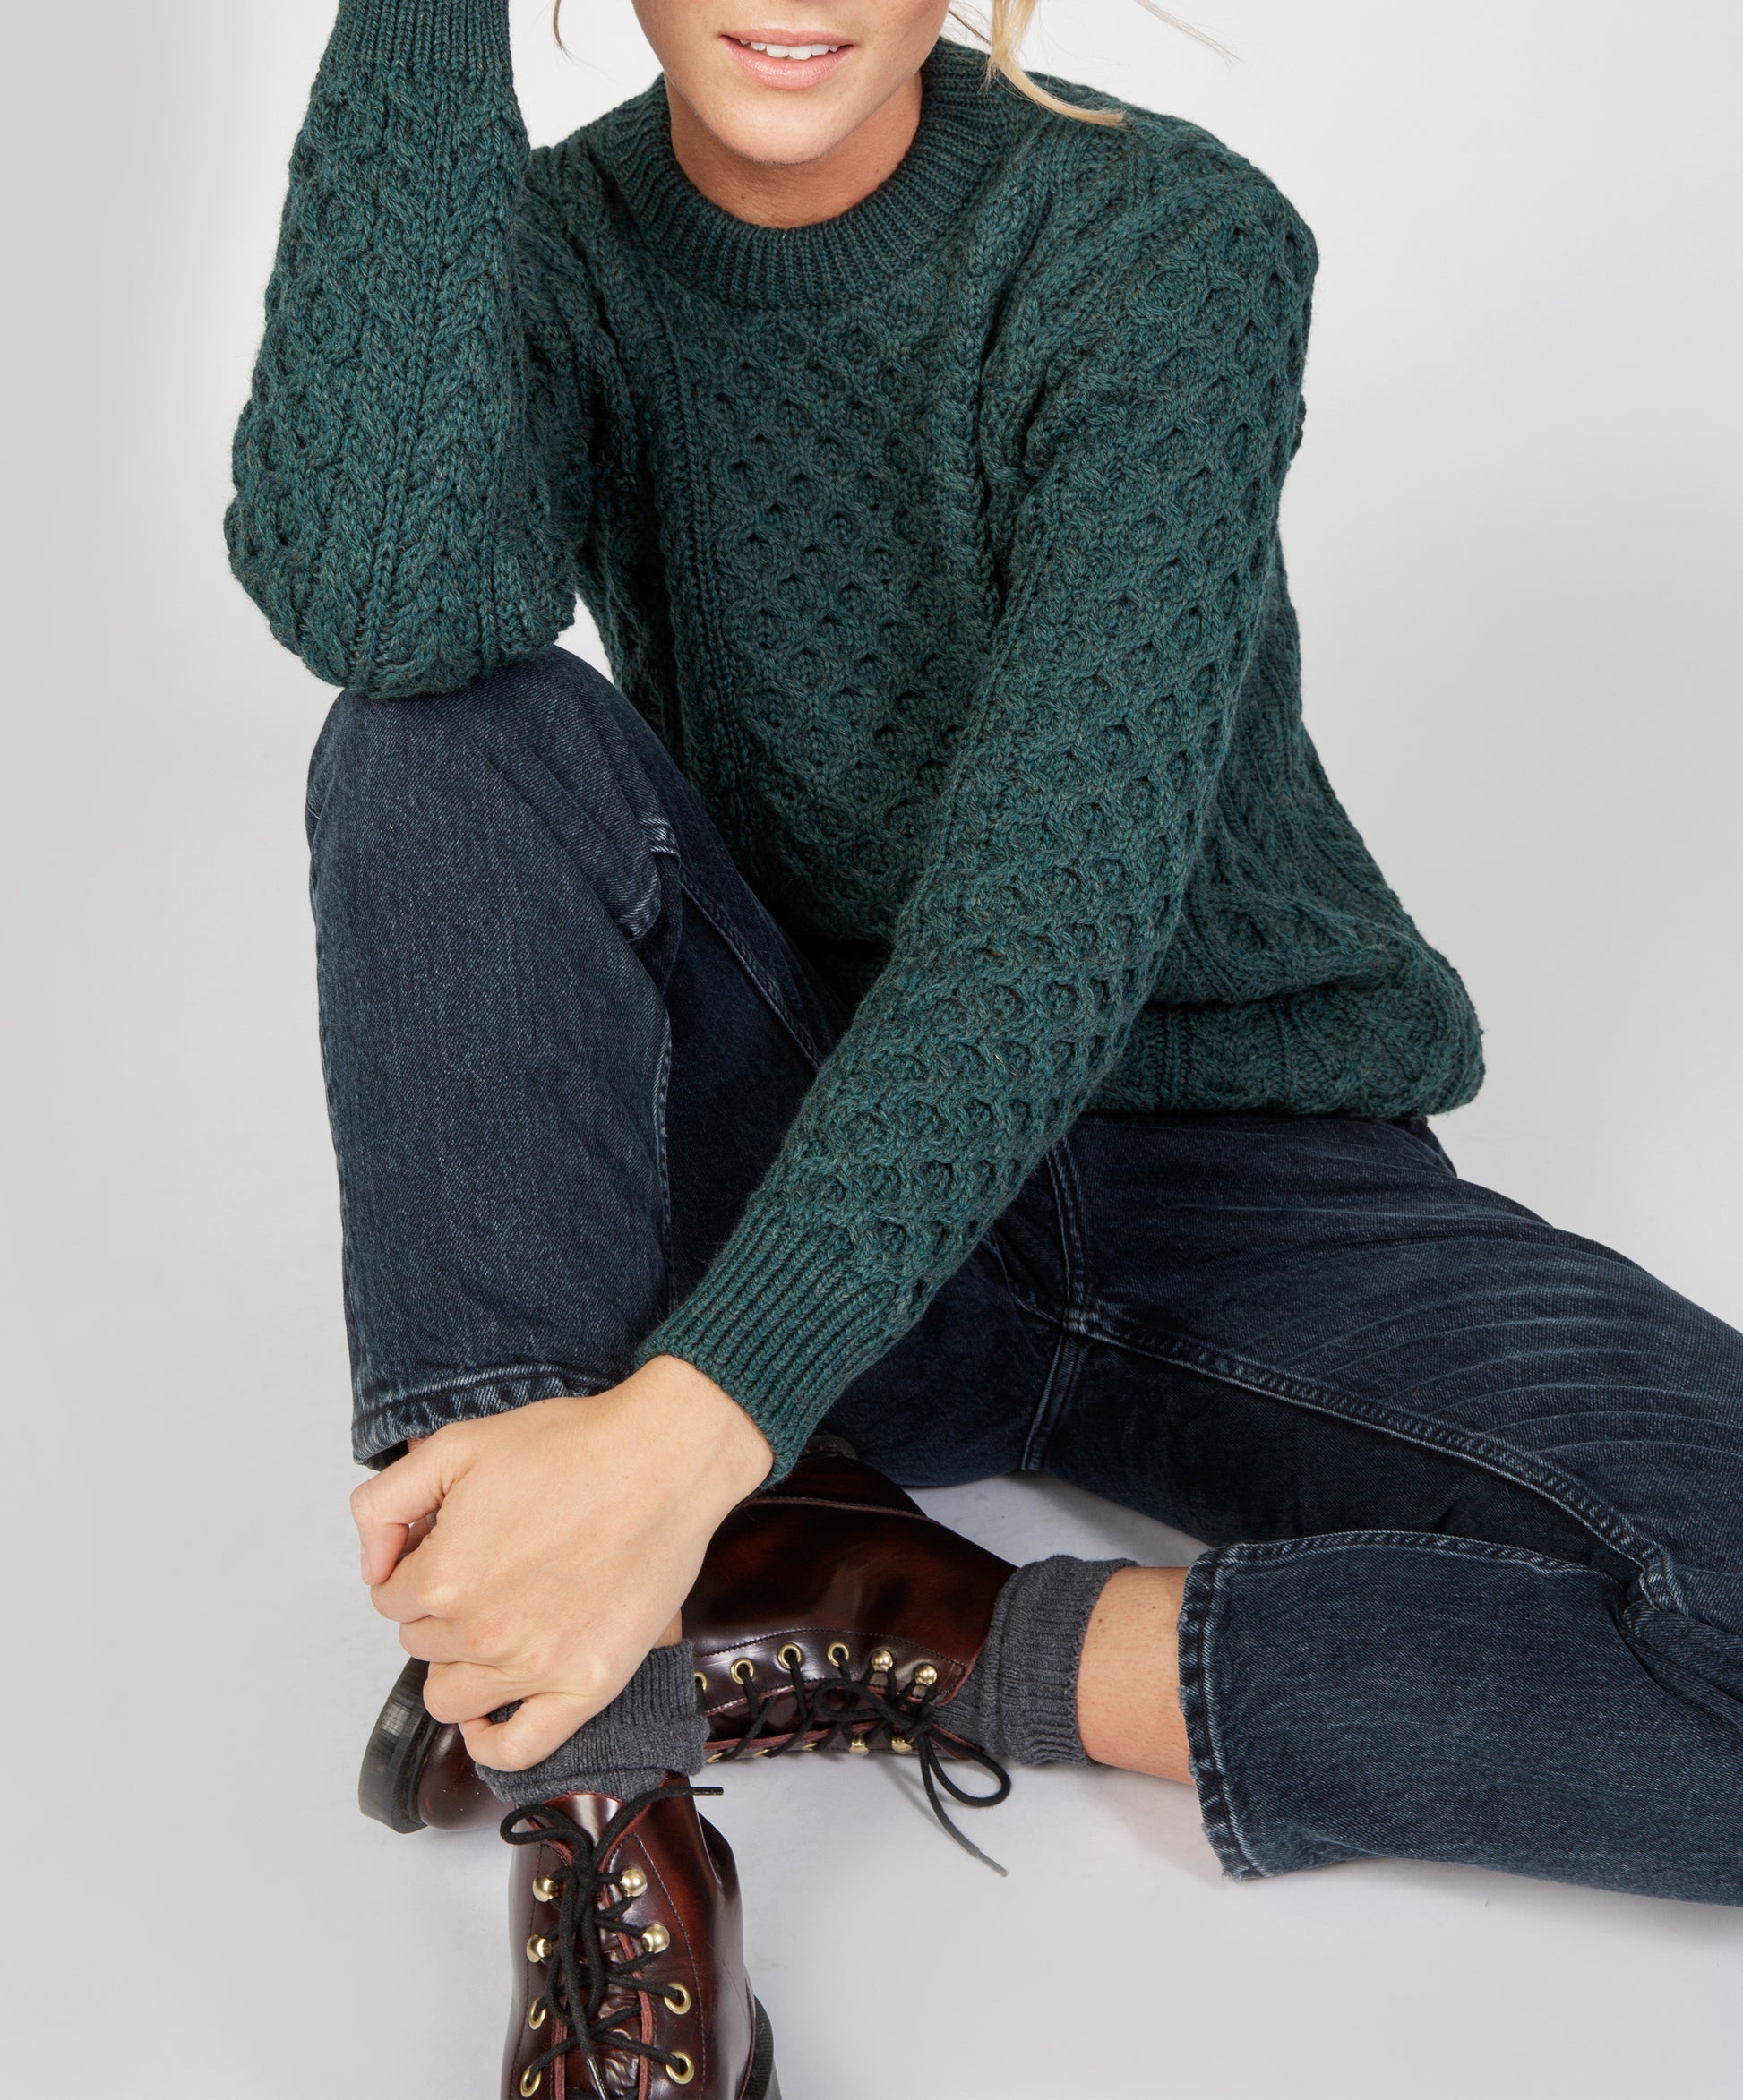 IrelandsEye Knitwear Blasket Honeycomb Stitch Womens Aran Sweater Evergreen